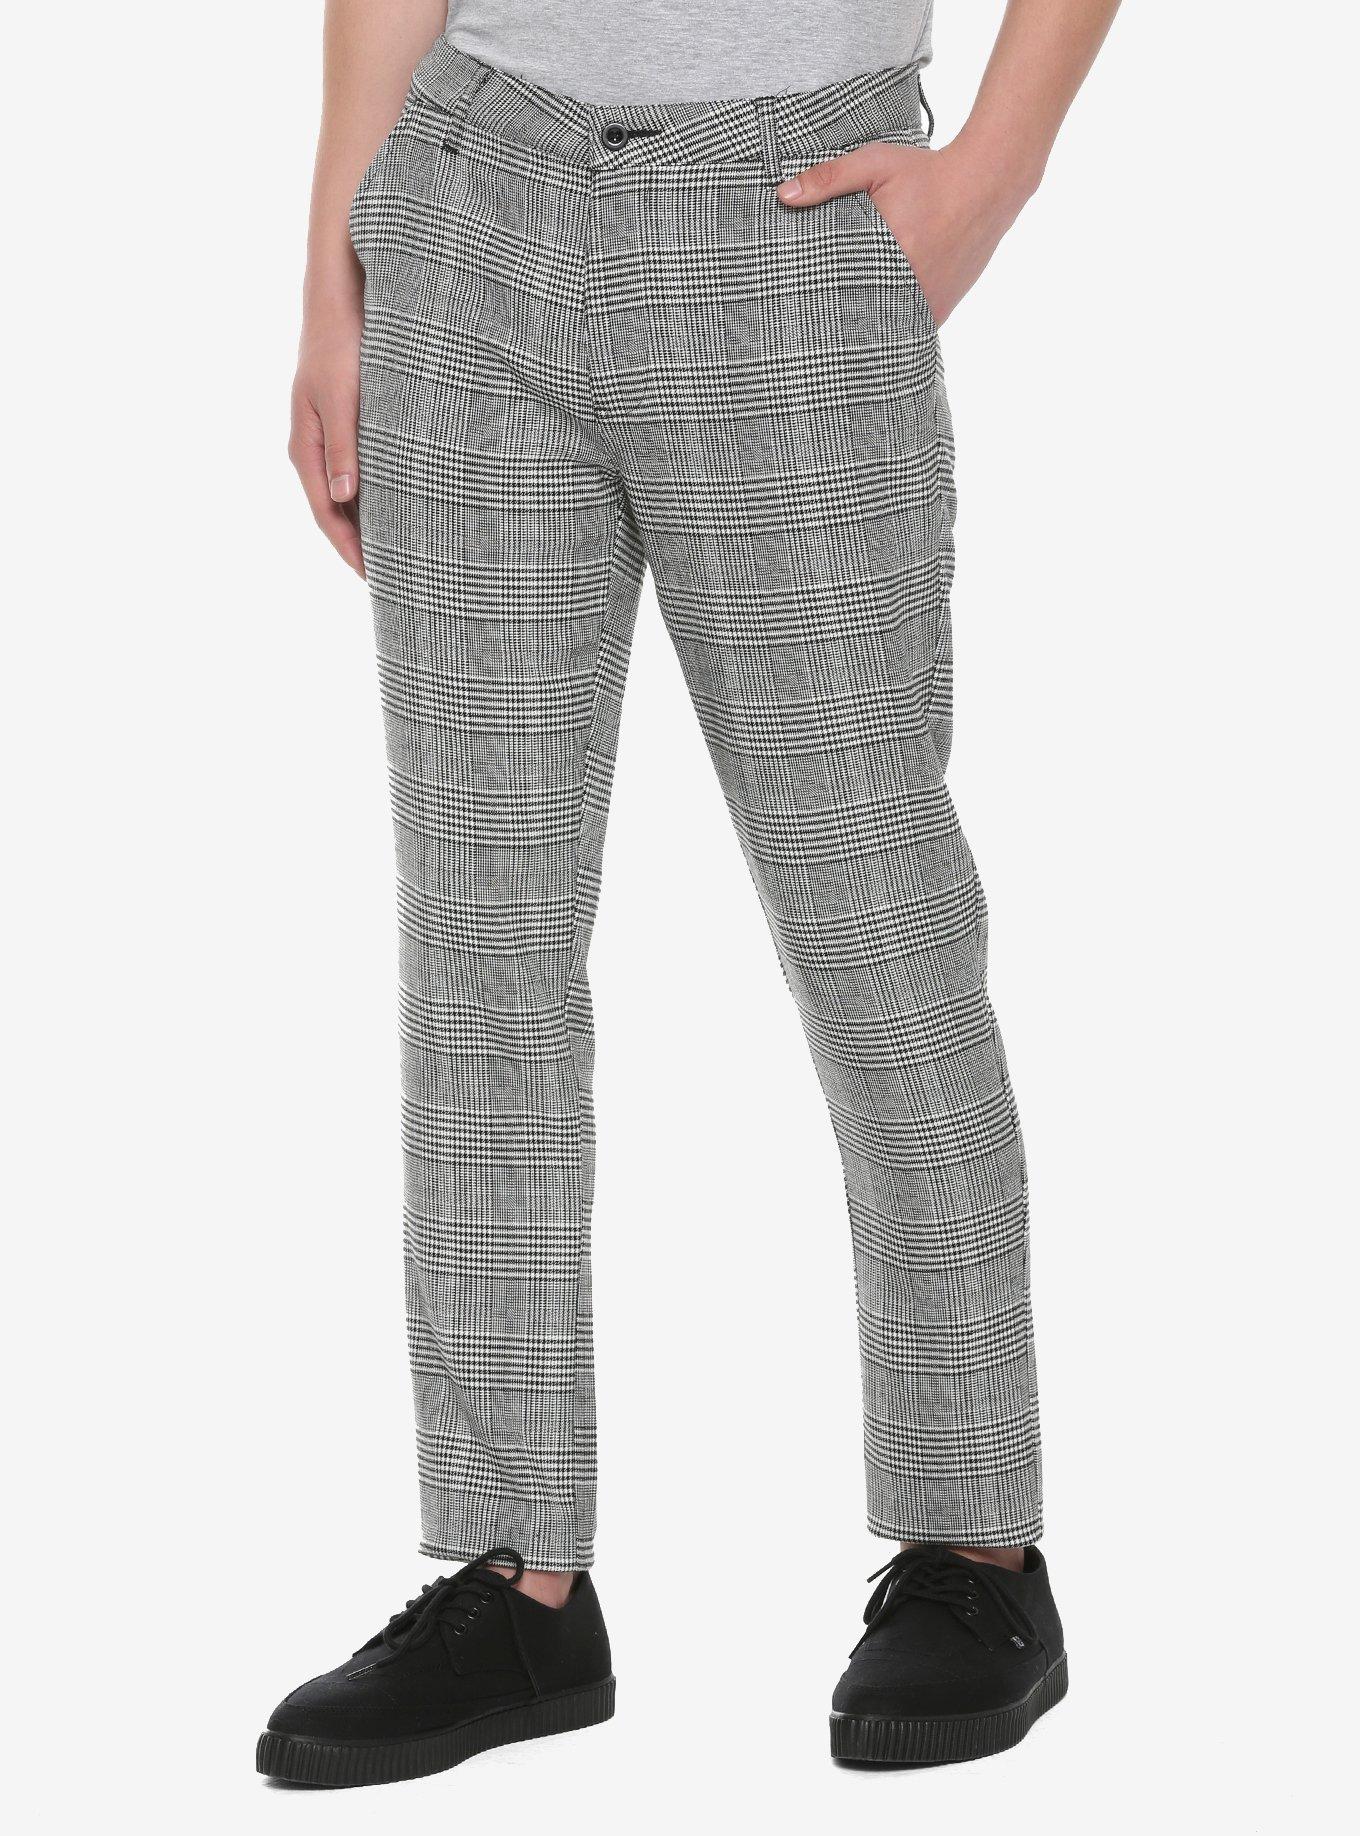 Grey Plaid Pants